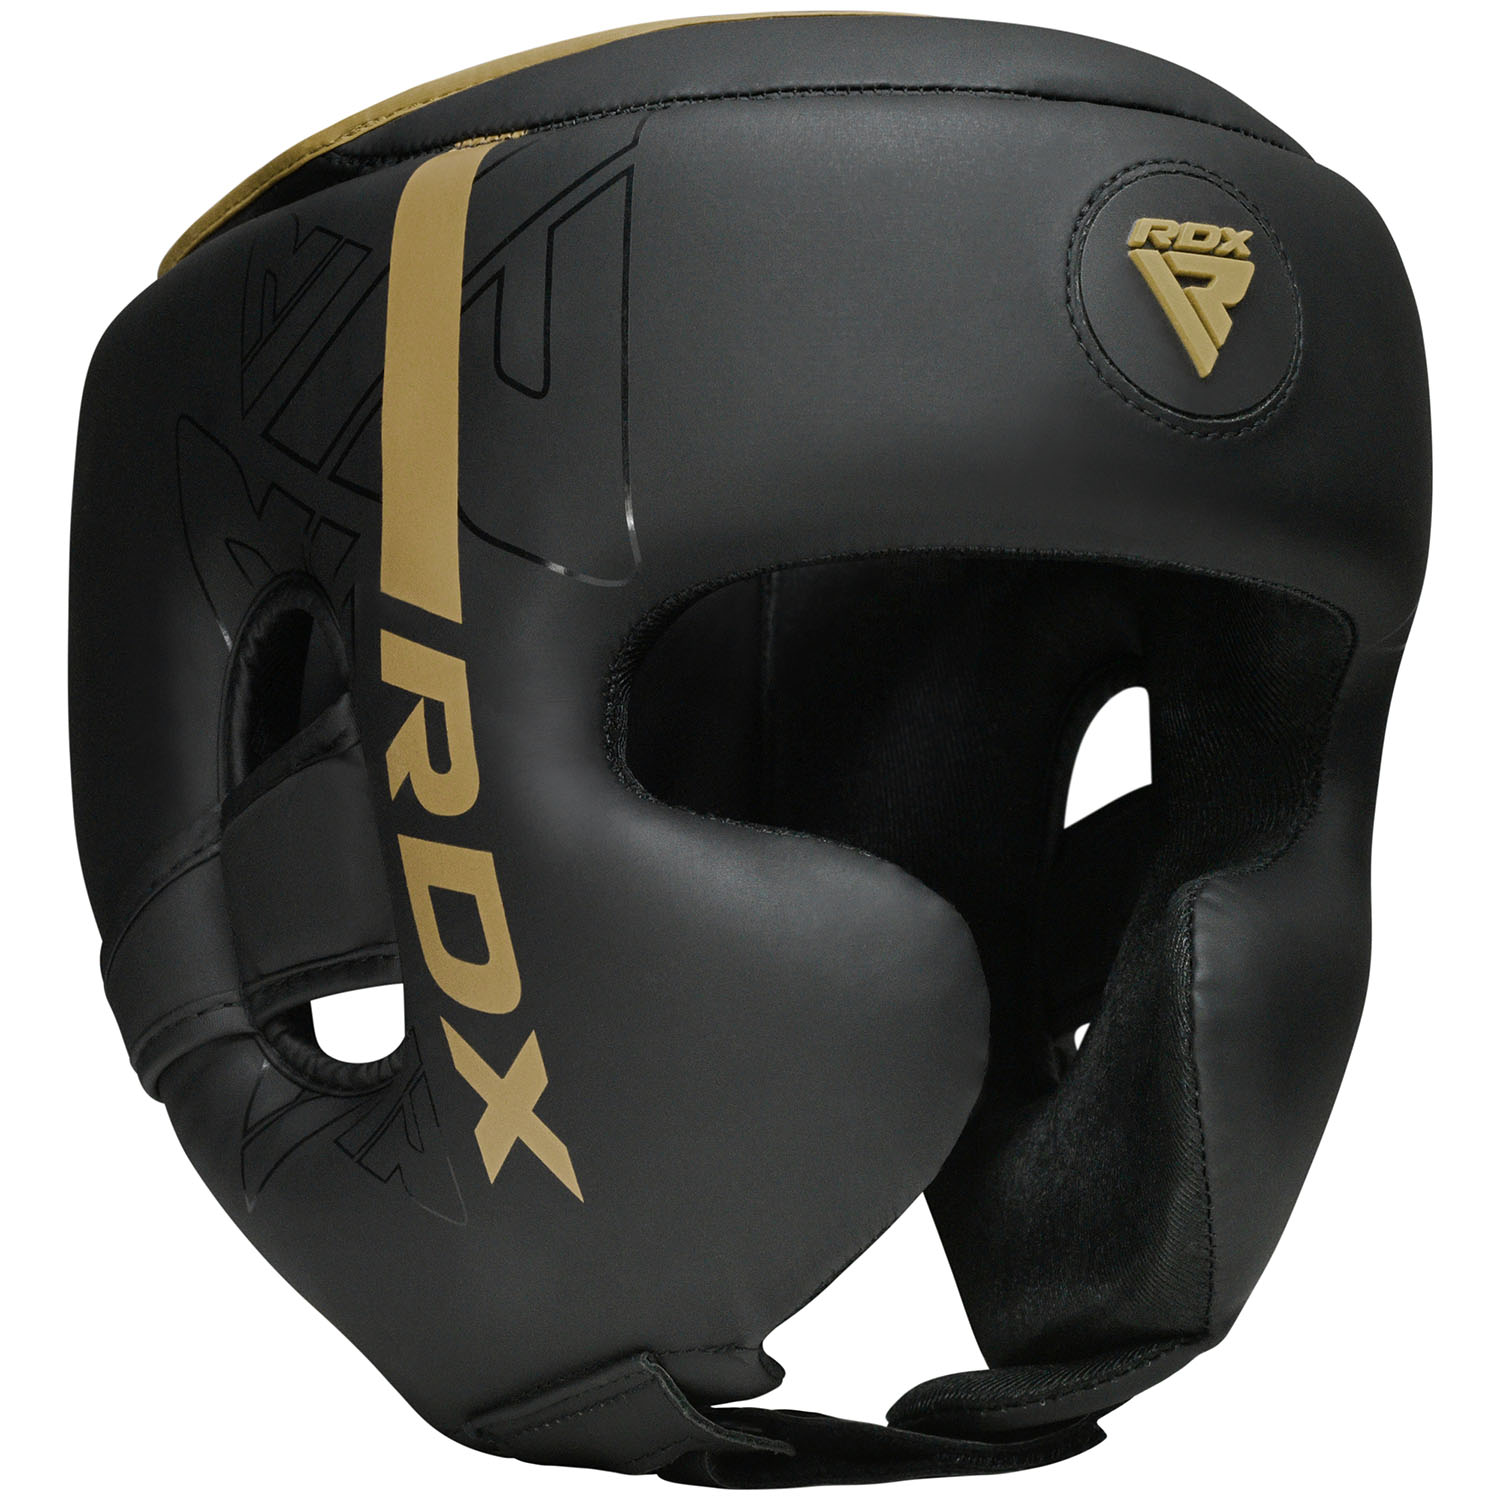 RDX Kopfschutz, Kara Series F6, schwarz-gold